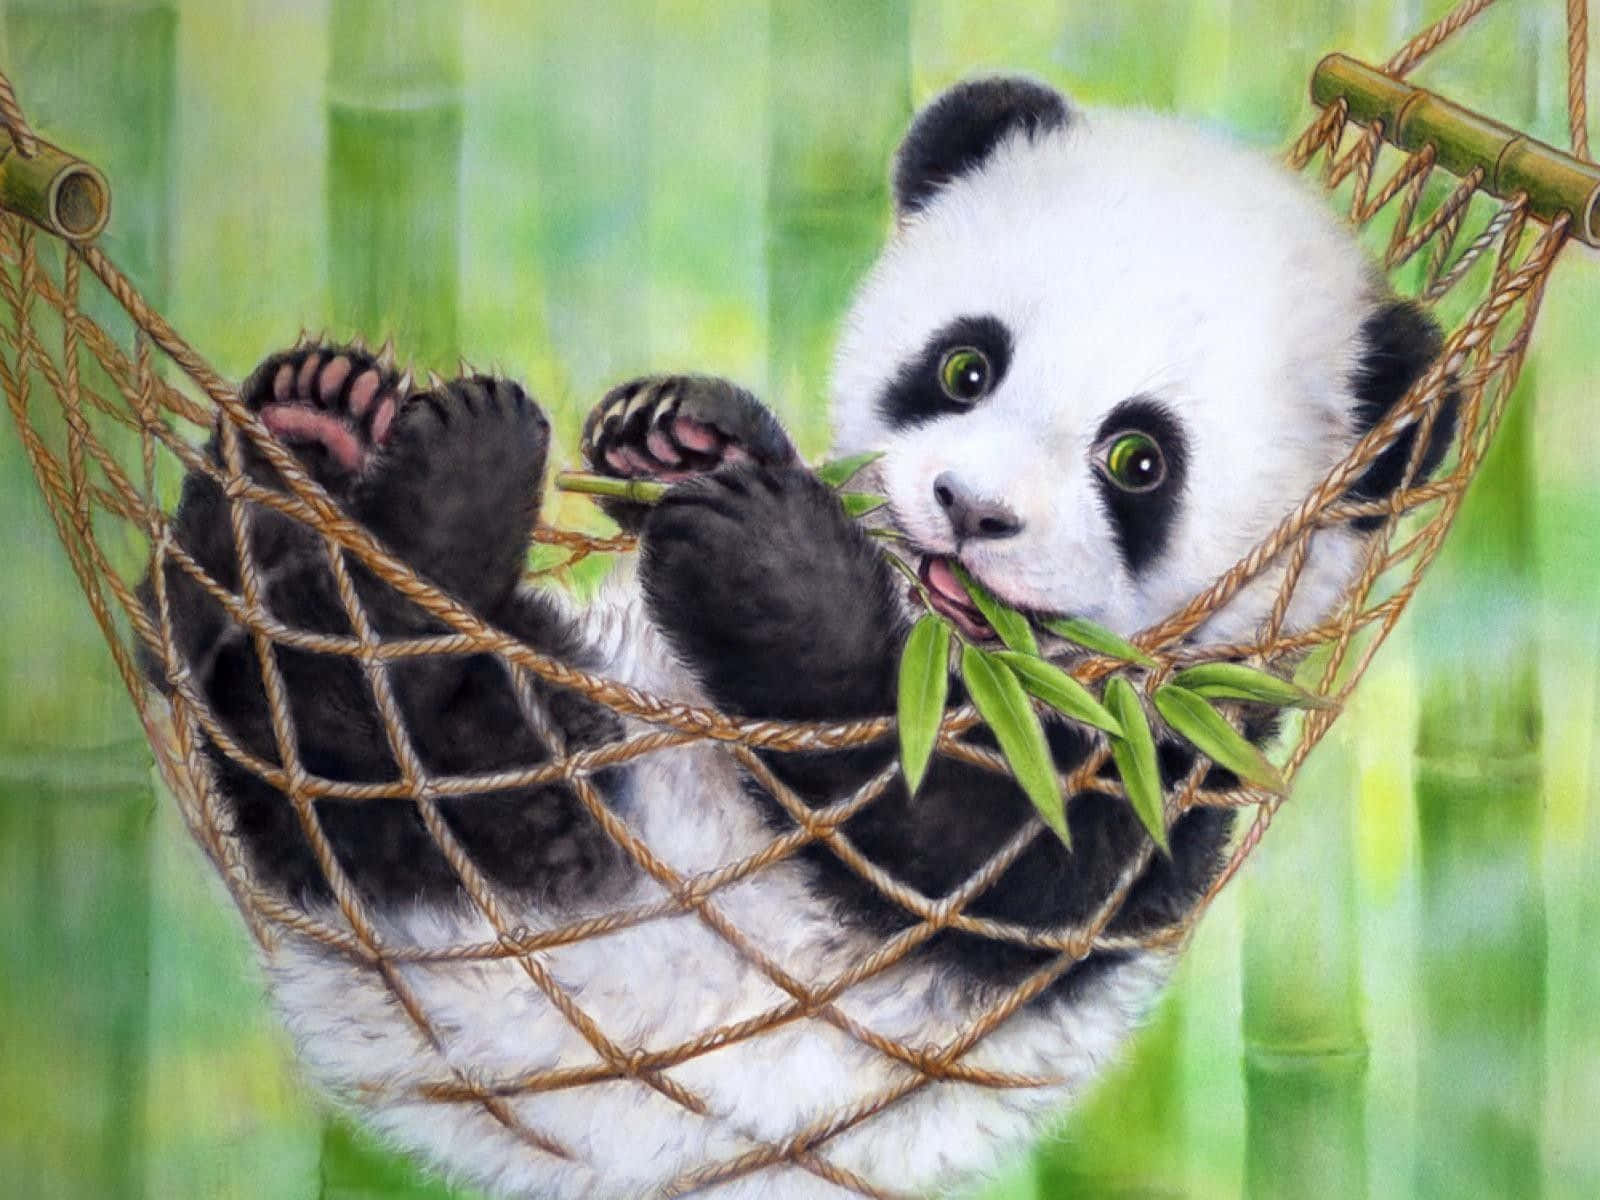 Giant Panda Relaxing On Hammock Background